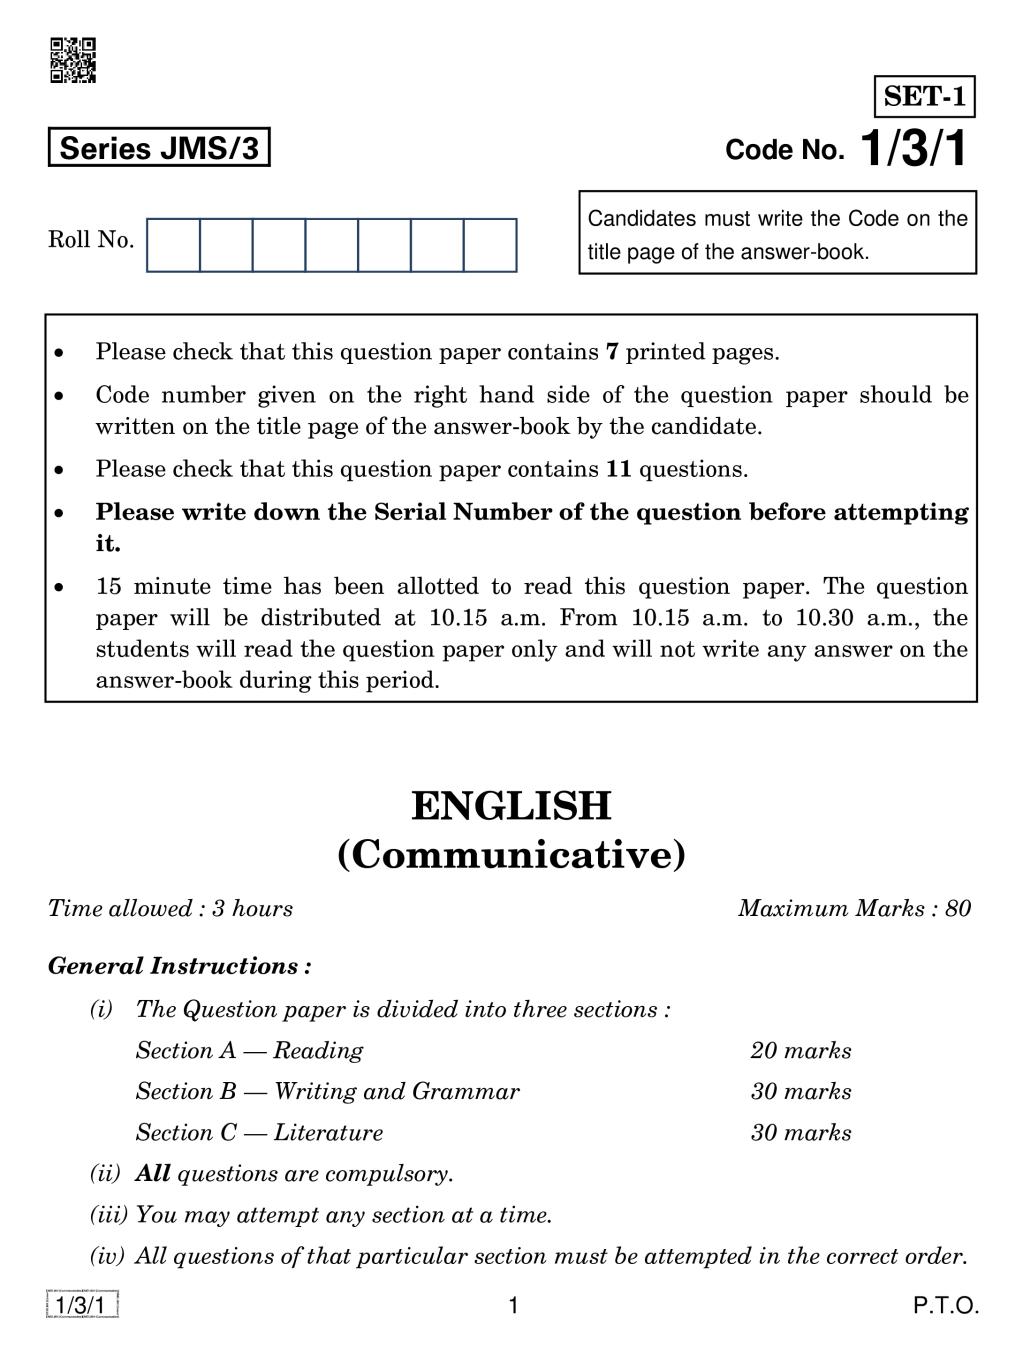 grade 10 english research paper